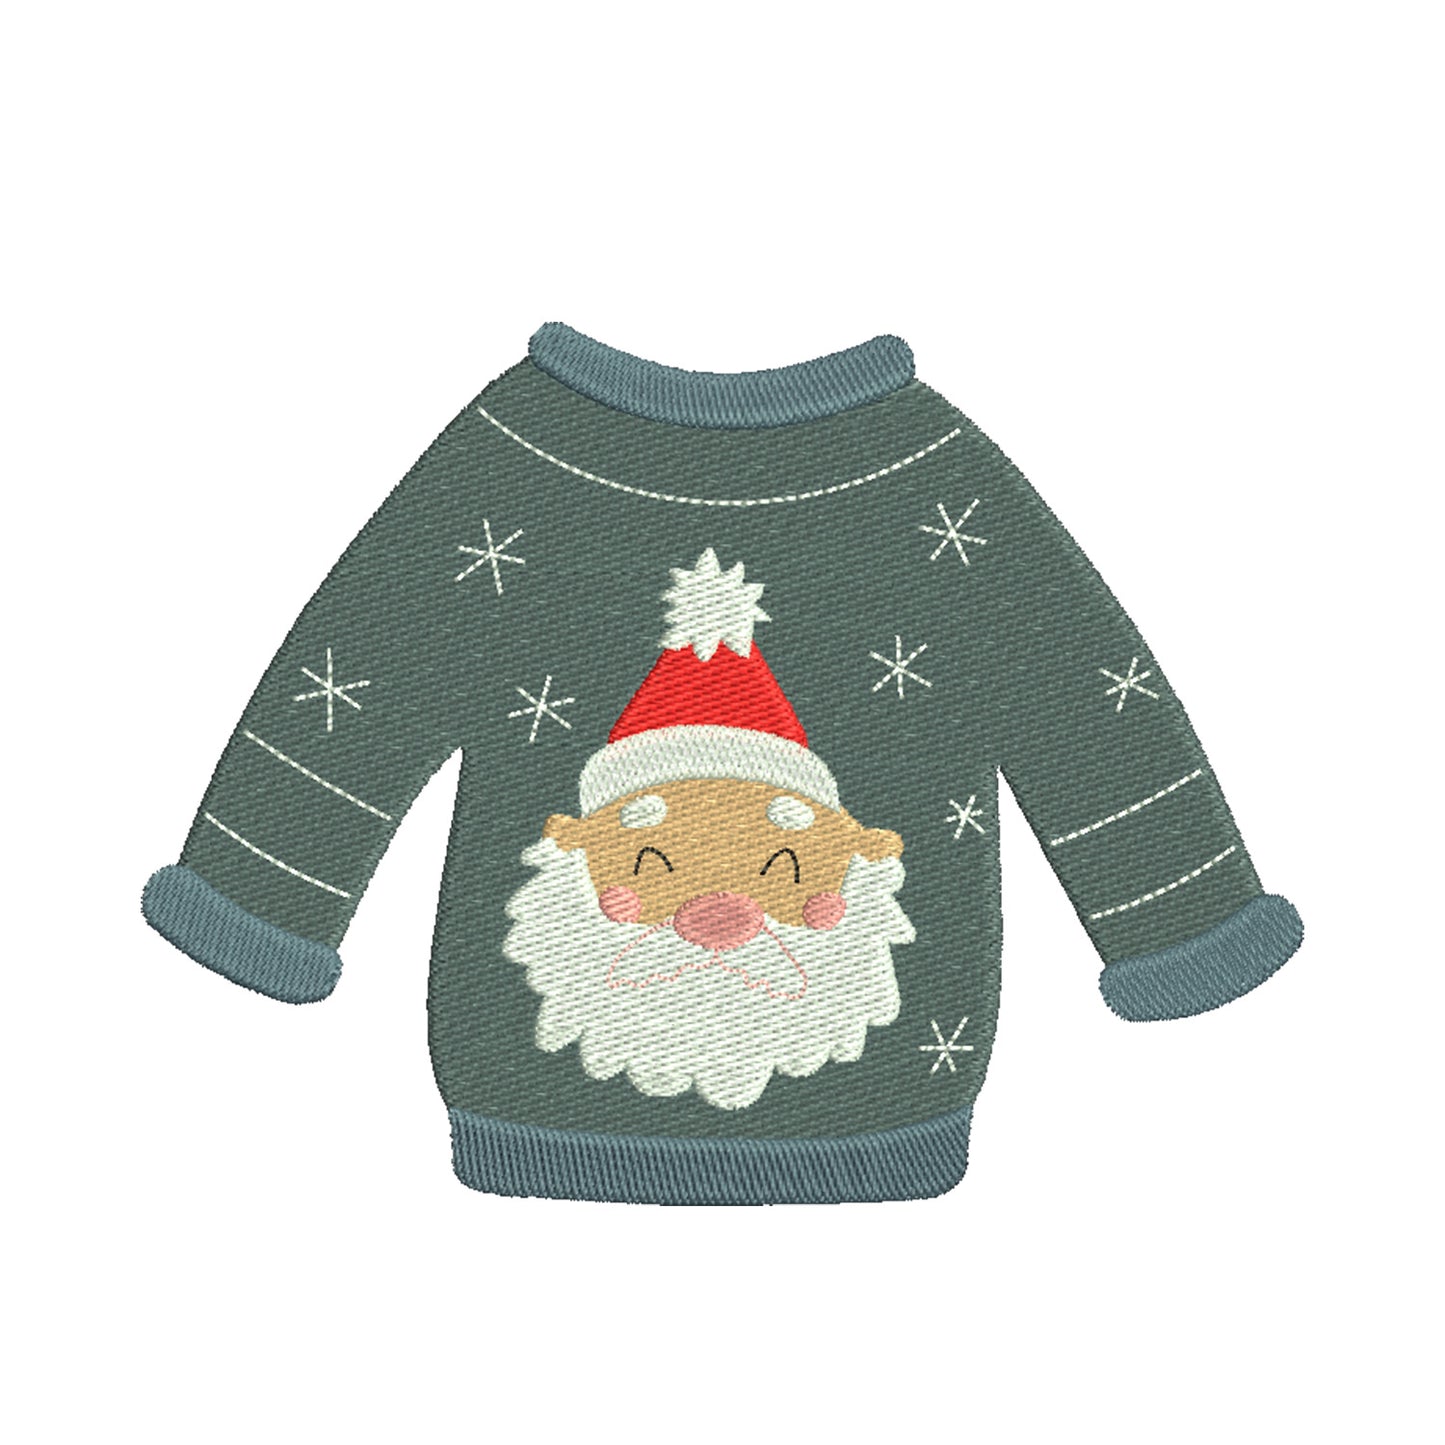 Embroidery designs christmas swearter santa - 910100